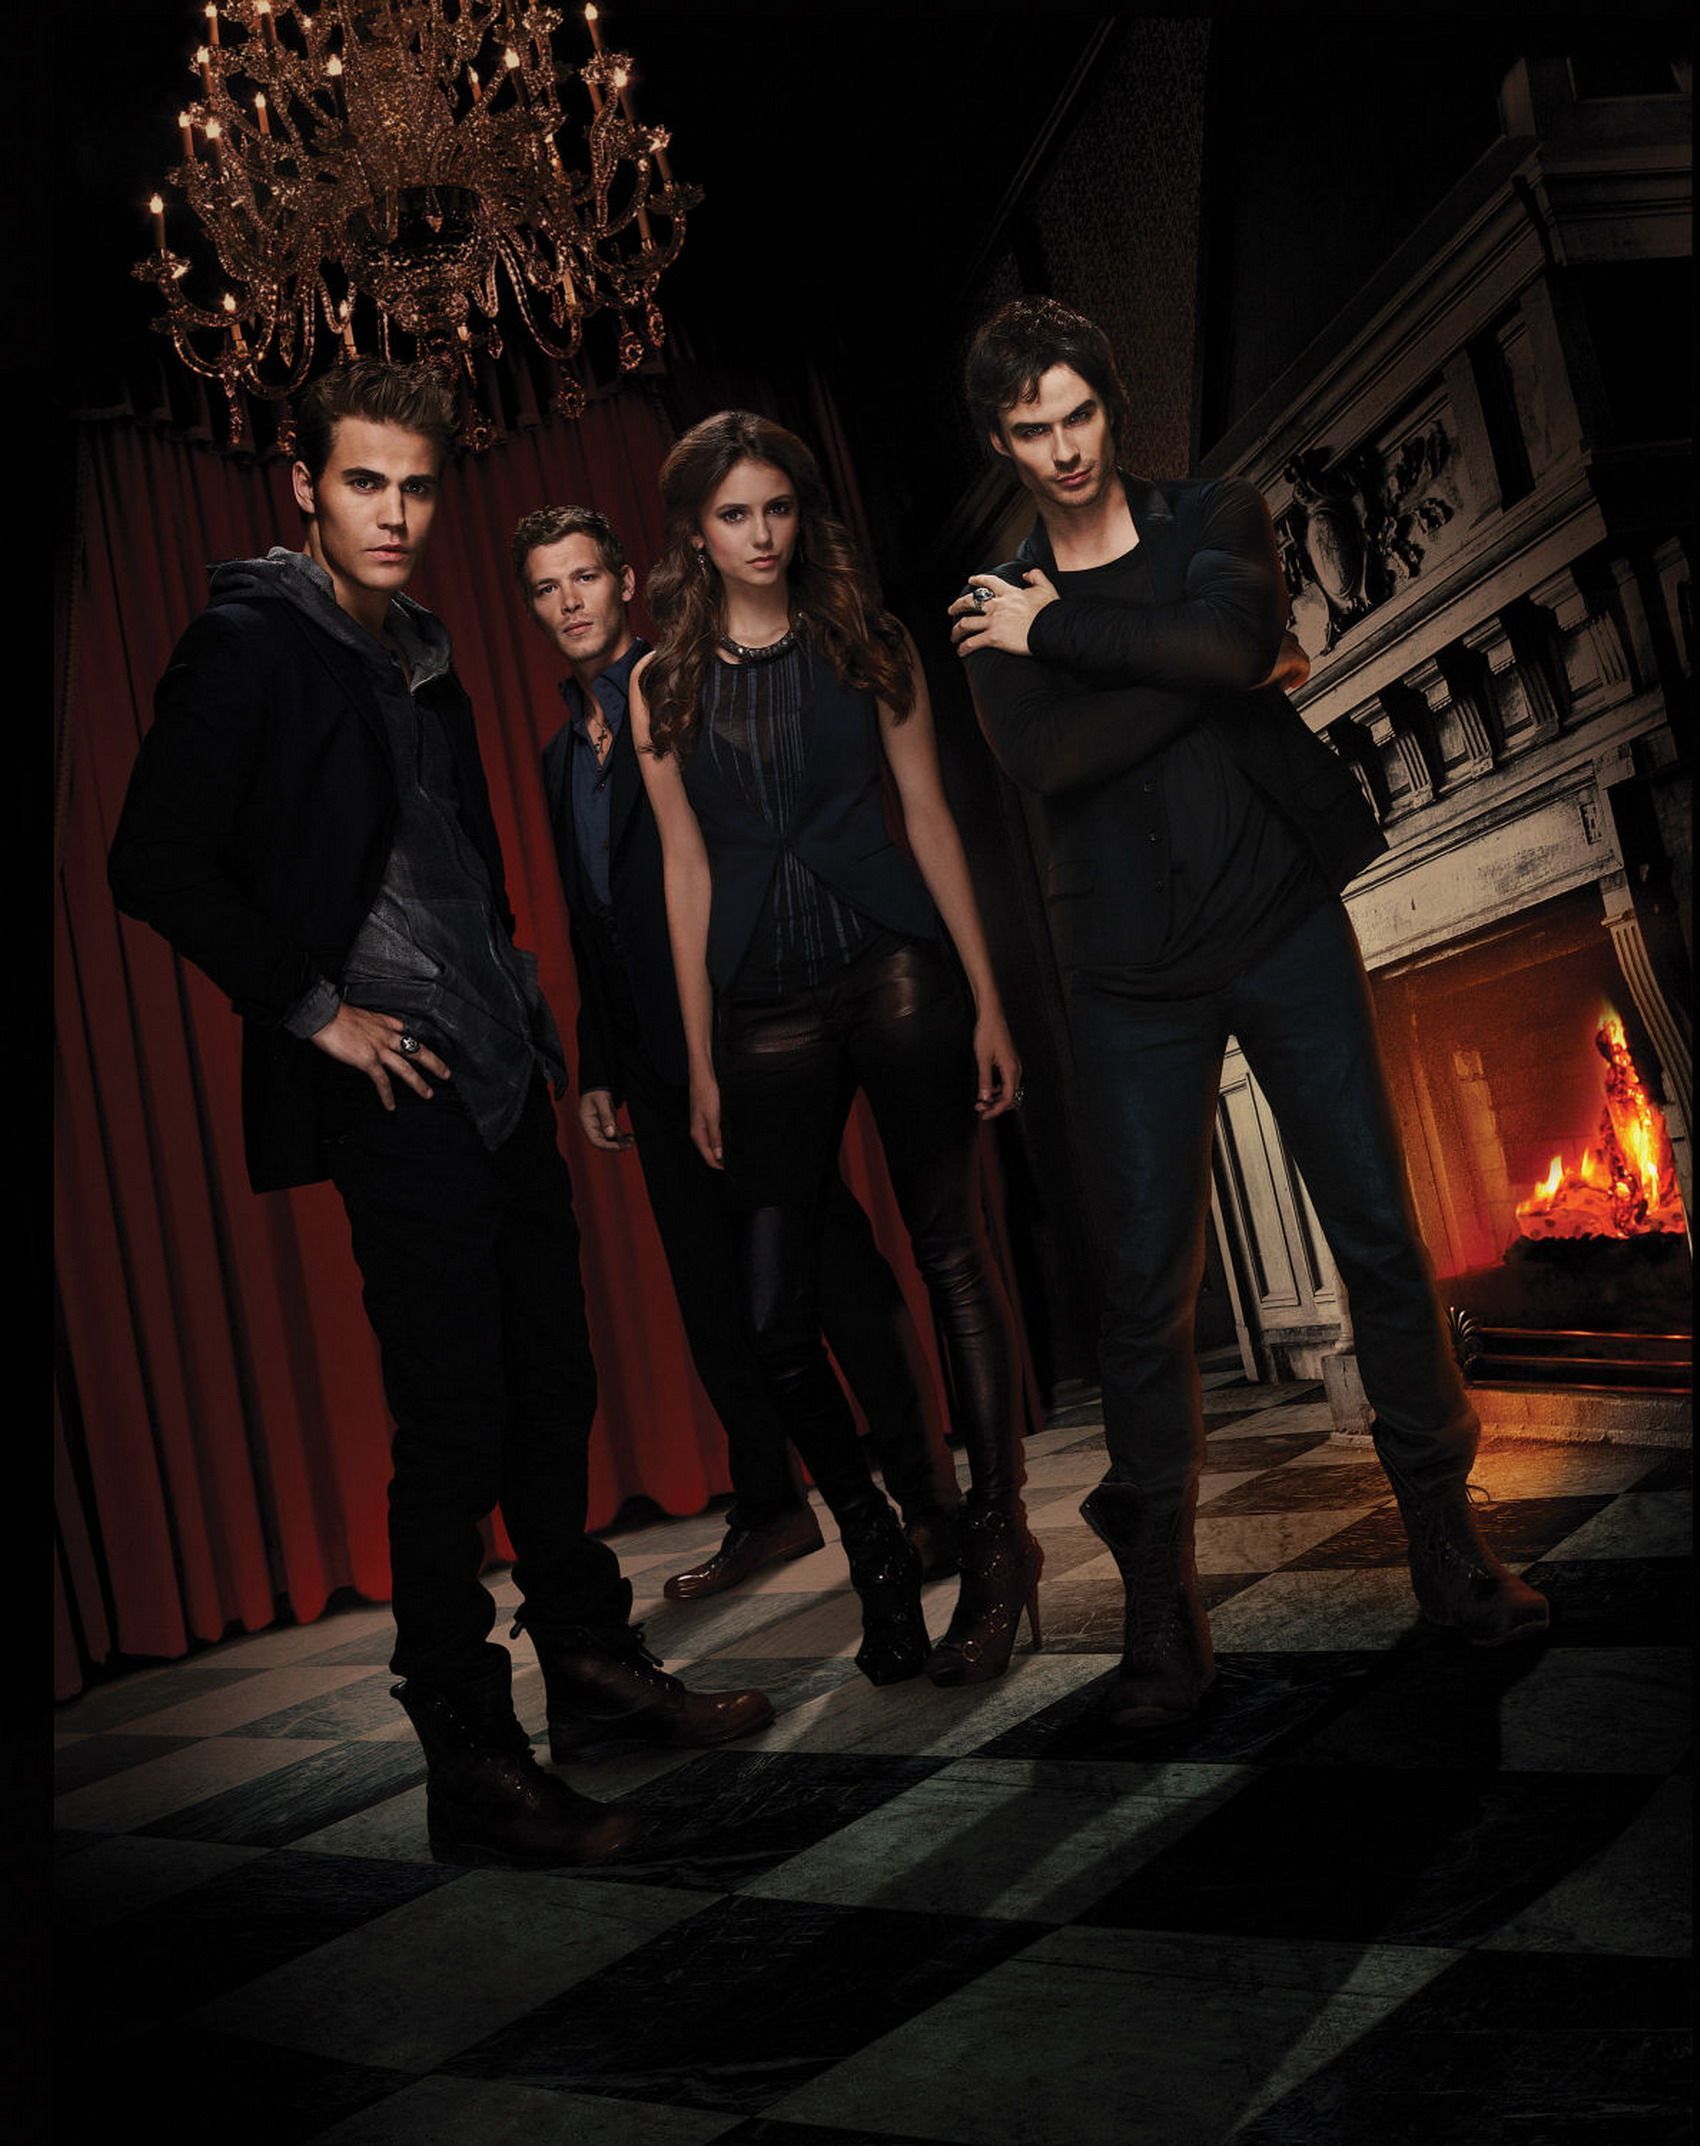 The Vampire Diaries S3 Cast: Paul Wesley Stefan Salvatore, Joseph Morgan Klaus Mikaelson, Nina Dobrev Ele. Дневники вампира, Дневники вампира актеры, Вампиры